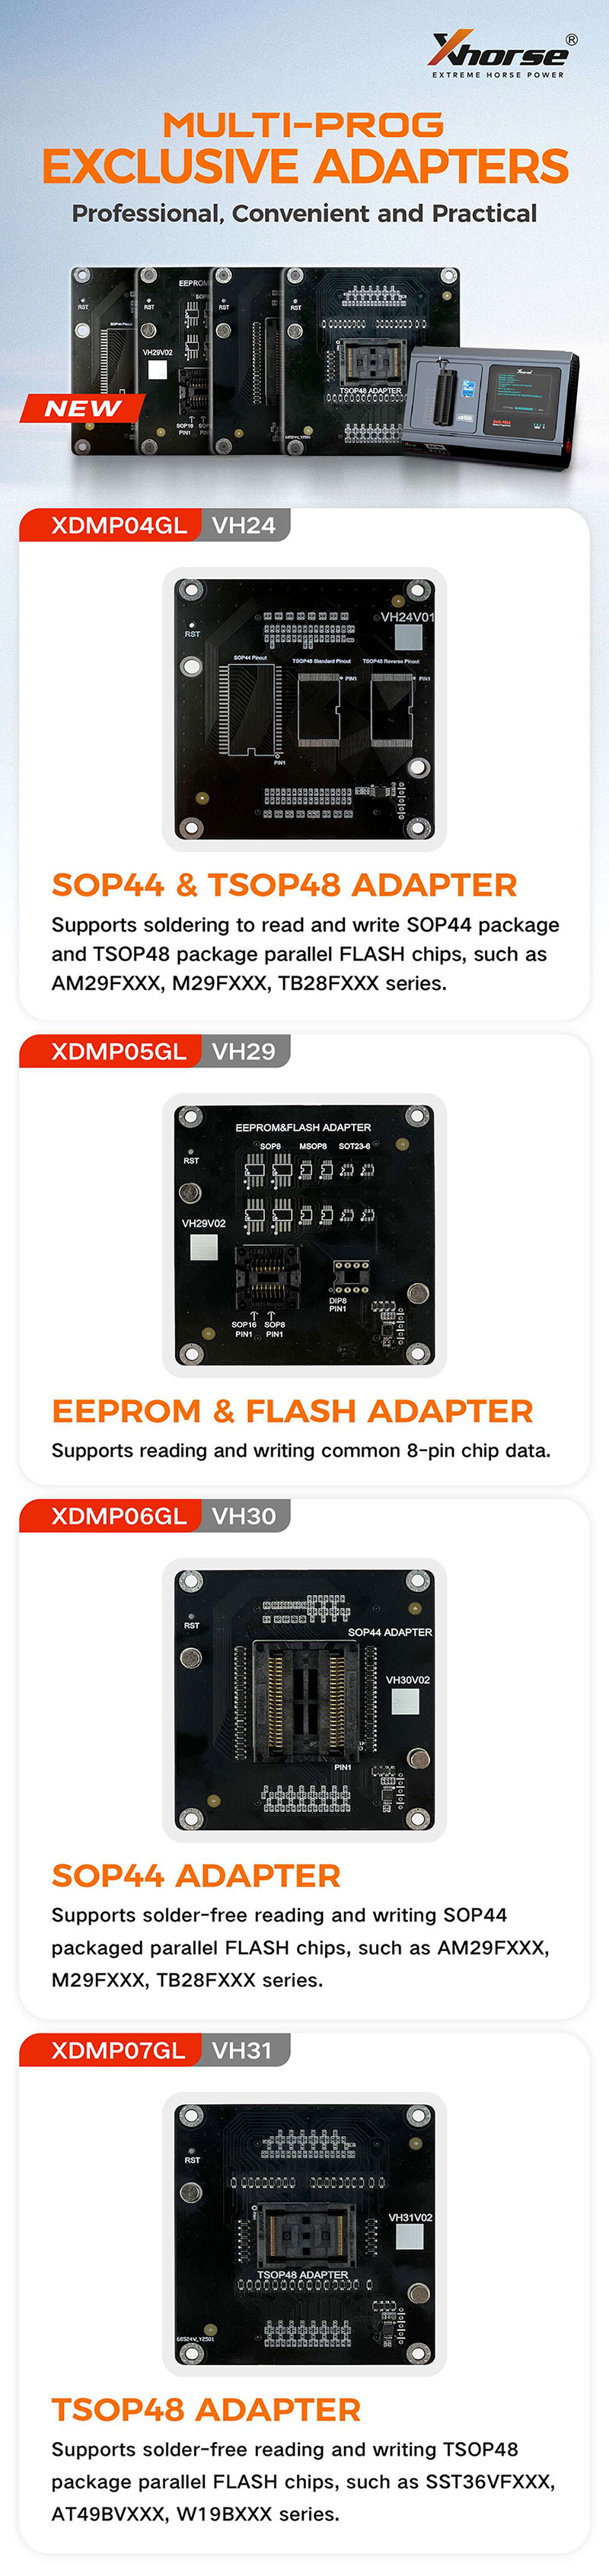 XHORSE Multi-prog SOP44 & TSOP48, EEPROM & FLASH, SOP44, TSOP48 Adapter